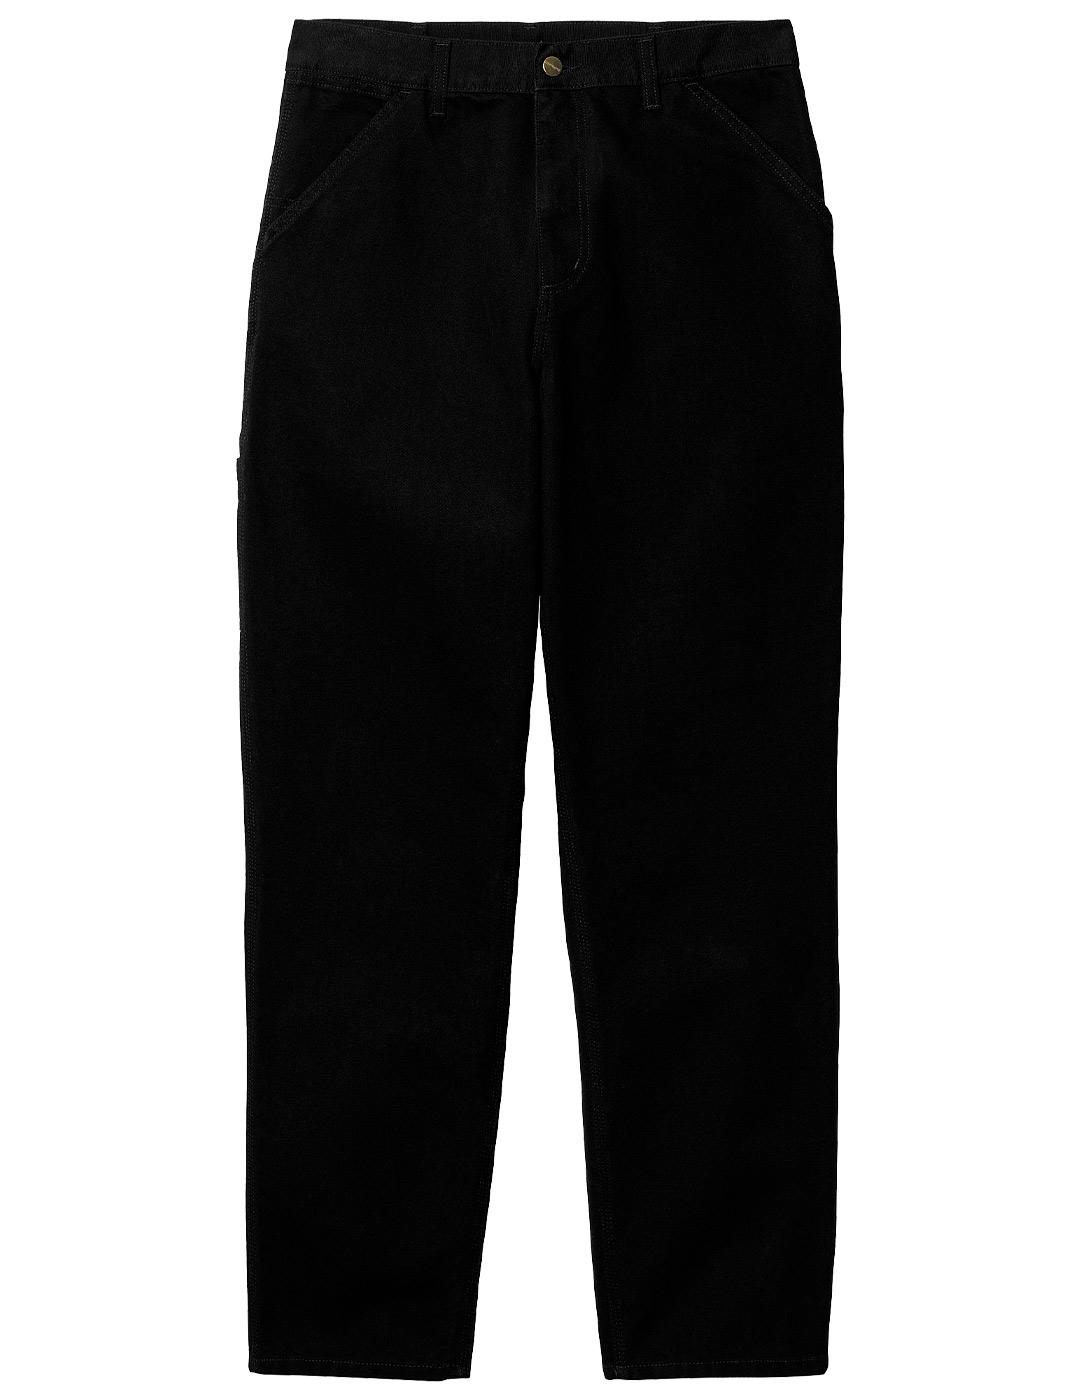 Pantalon Carhartt Wip Single Knee Noir